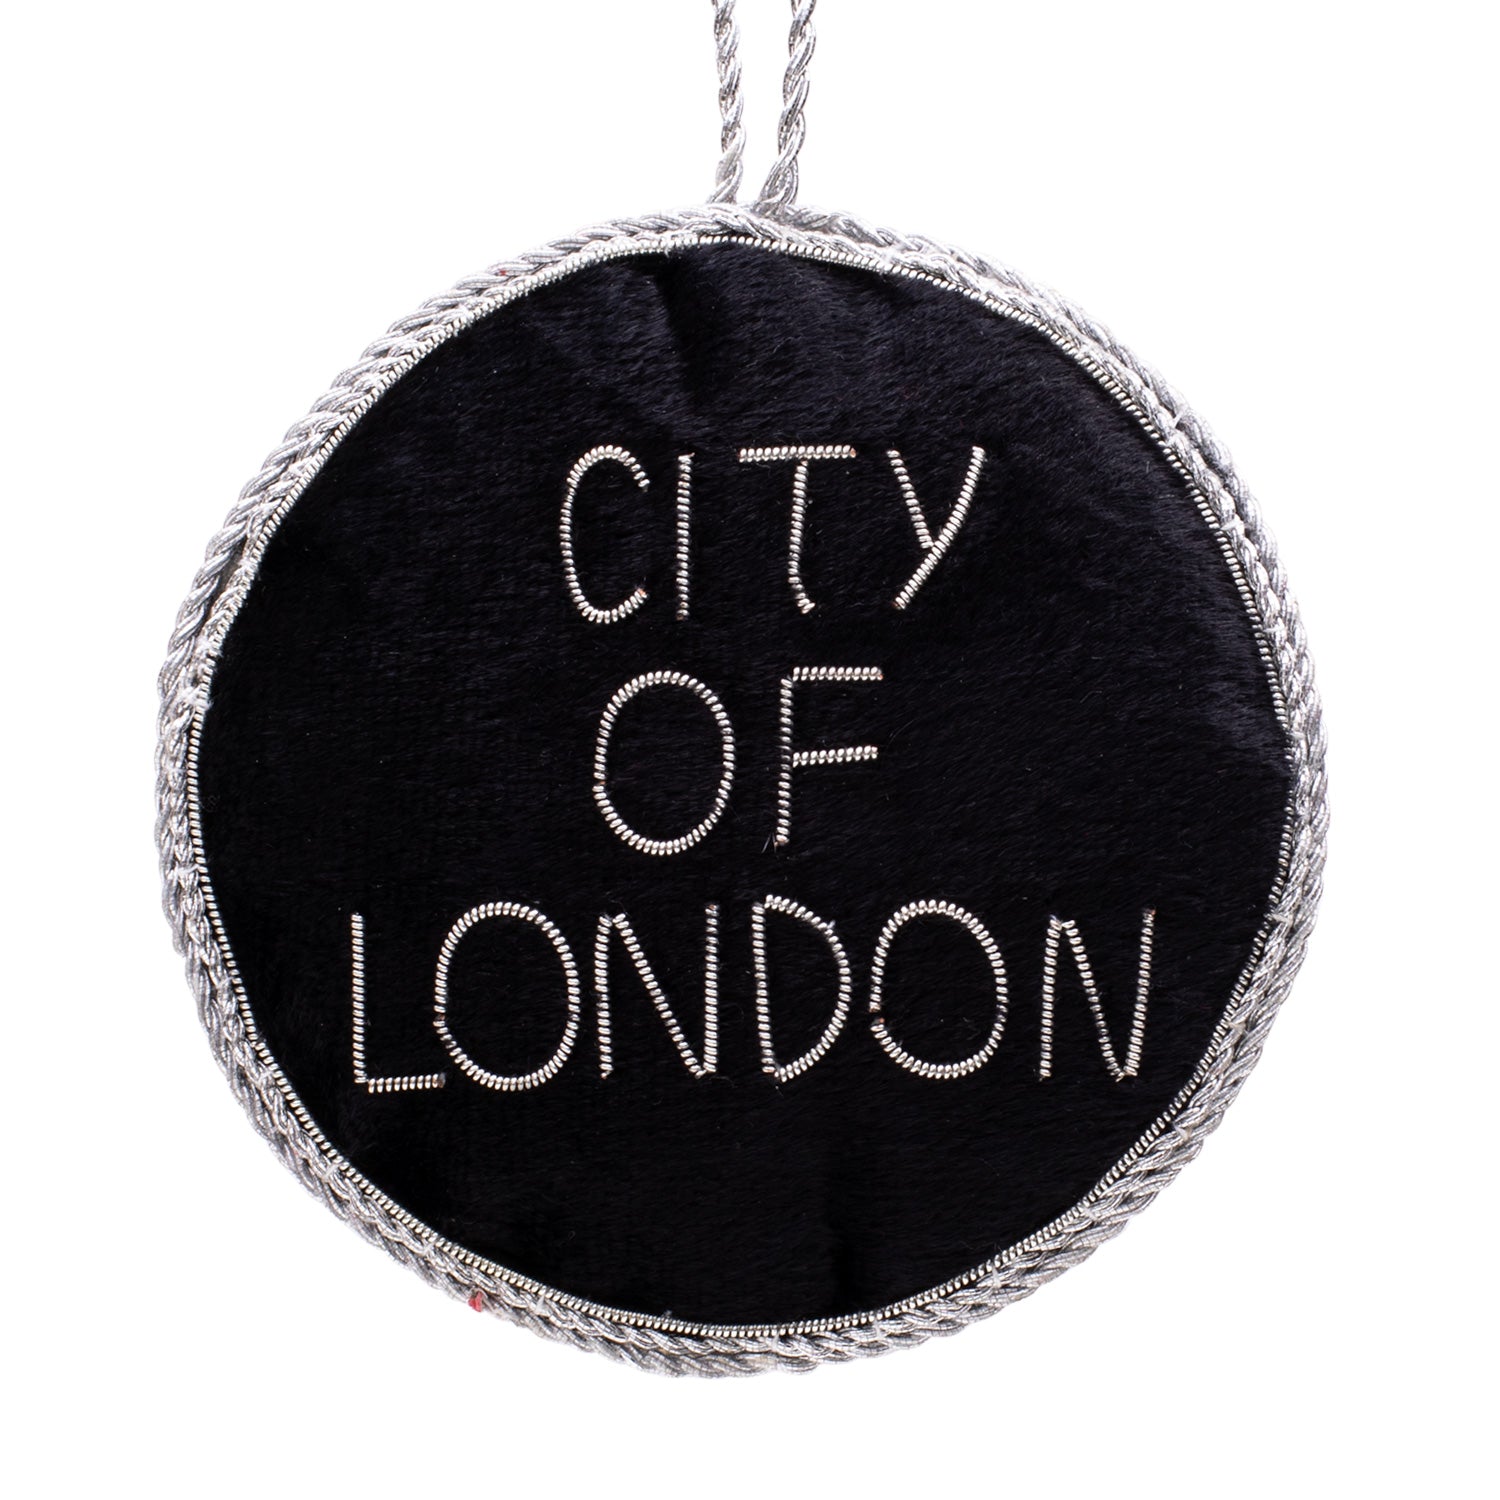 City Of London Stitched Christmas Decoration